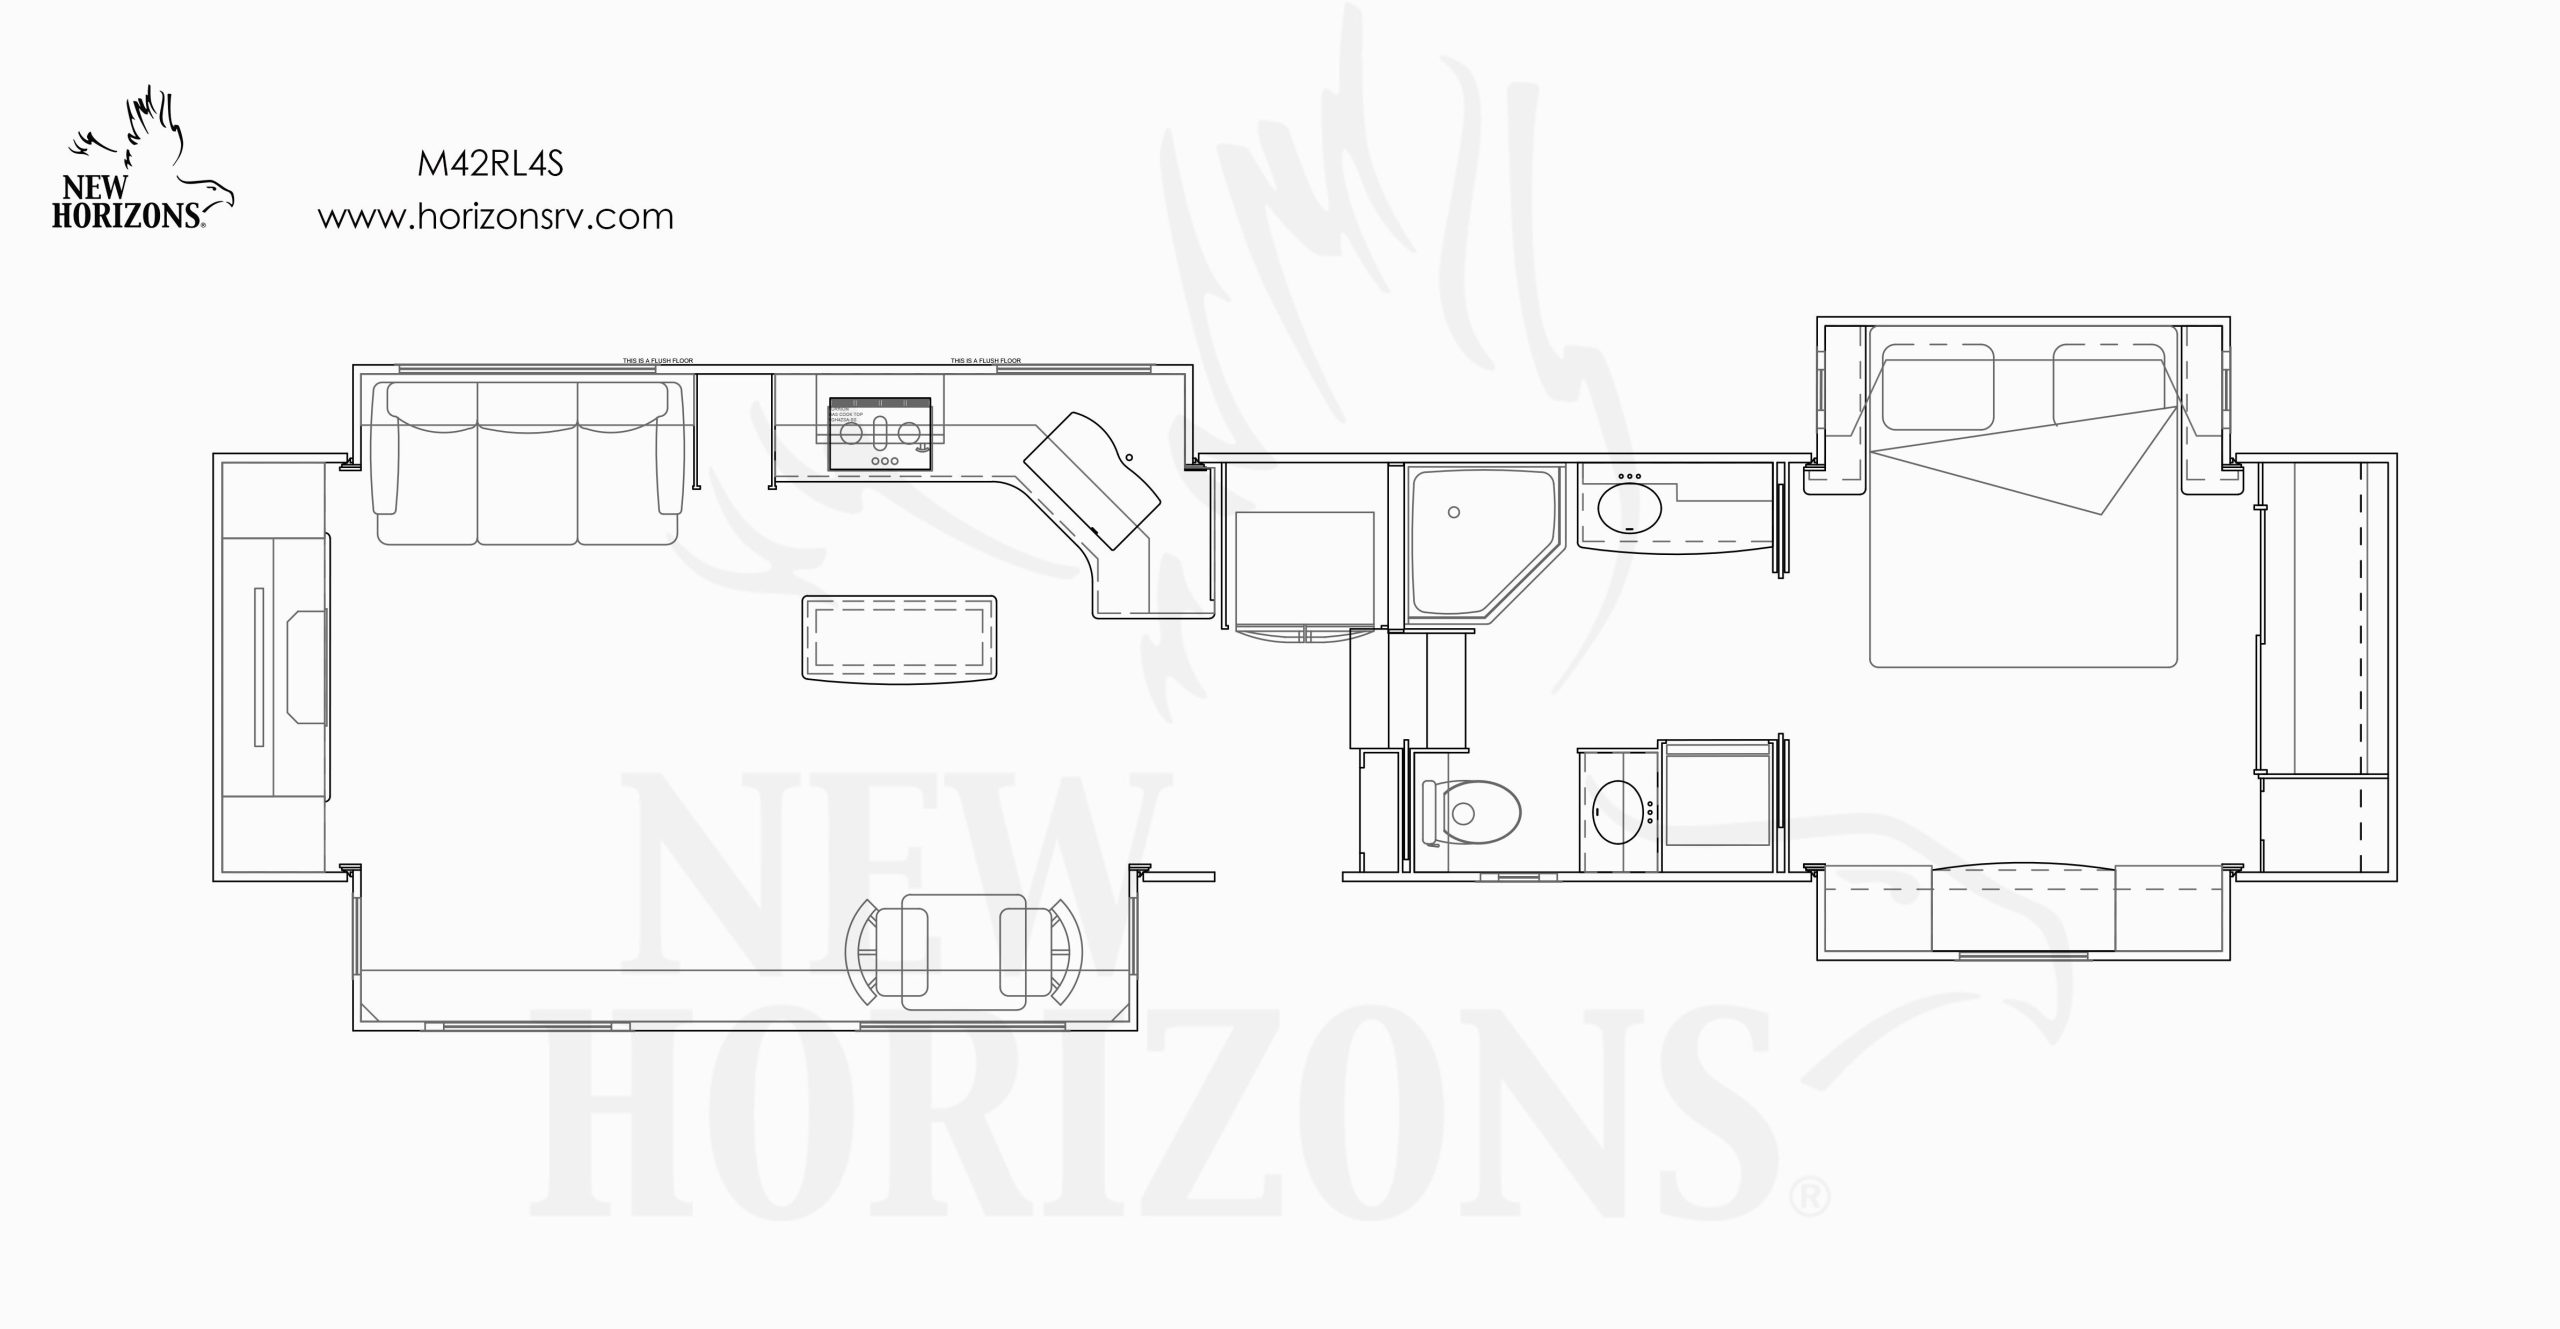 New Horizon Rv Floor Plans floorplans.click